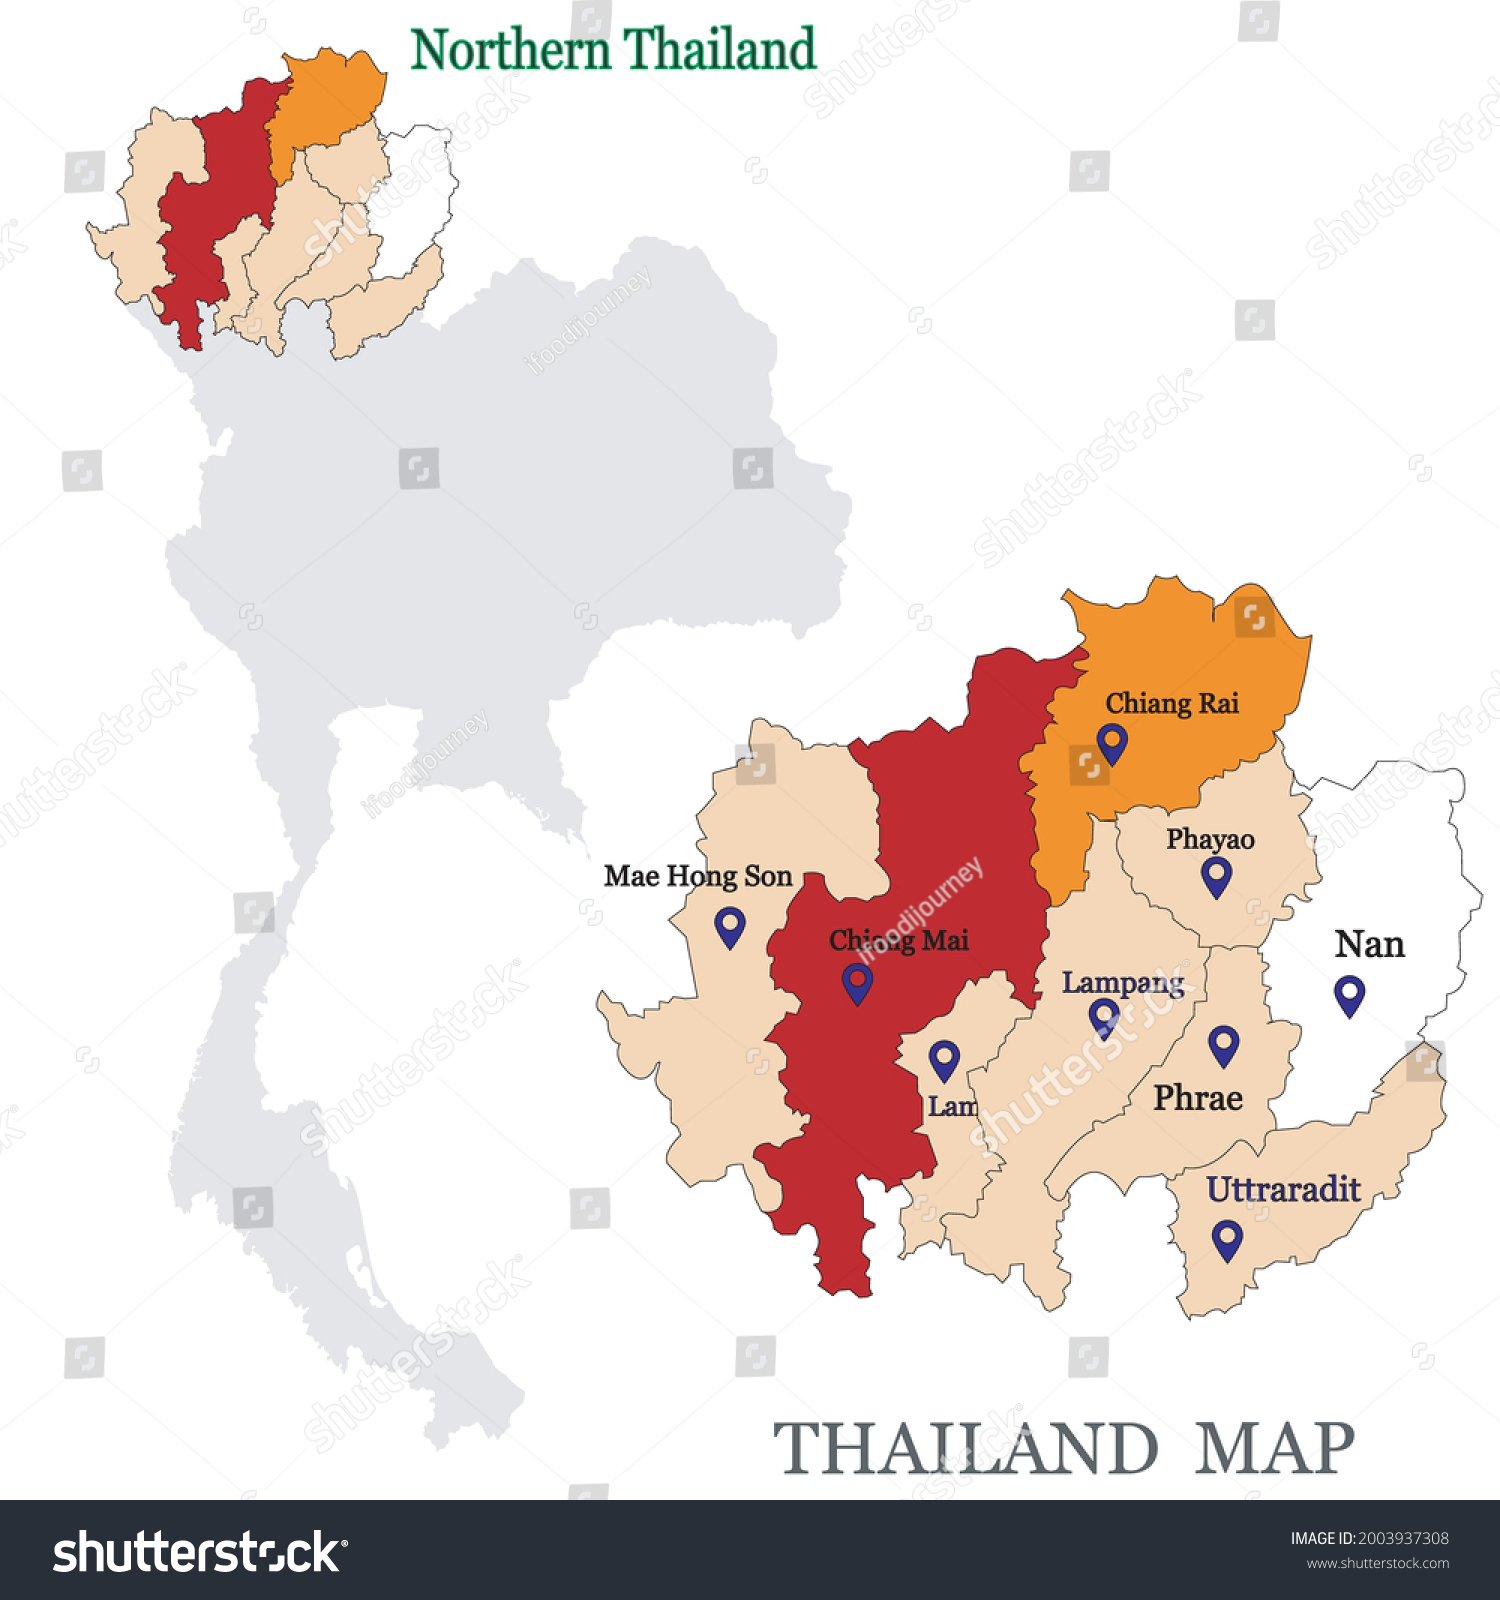 SVG of Maps of Northern Thailand with 9 Province, Chiang mai, Chiang rai, Phrae, Phayao, Lampang, Maehhongson, Uttaradit, Lamphun, Nan and focus on Chiang Mai with red colour and blue pin map svg